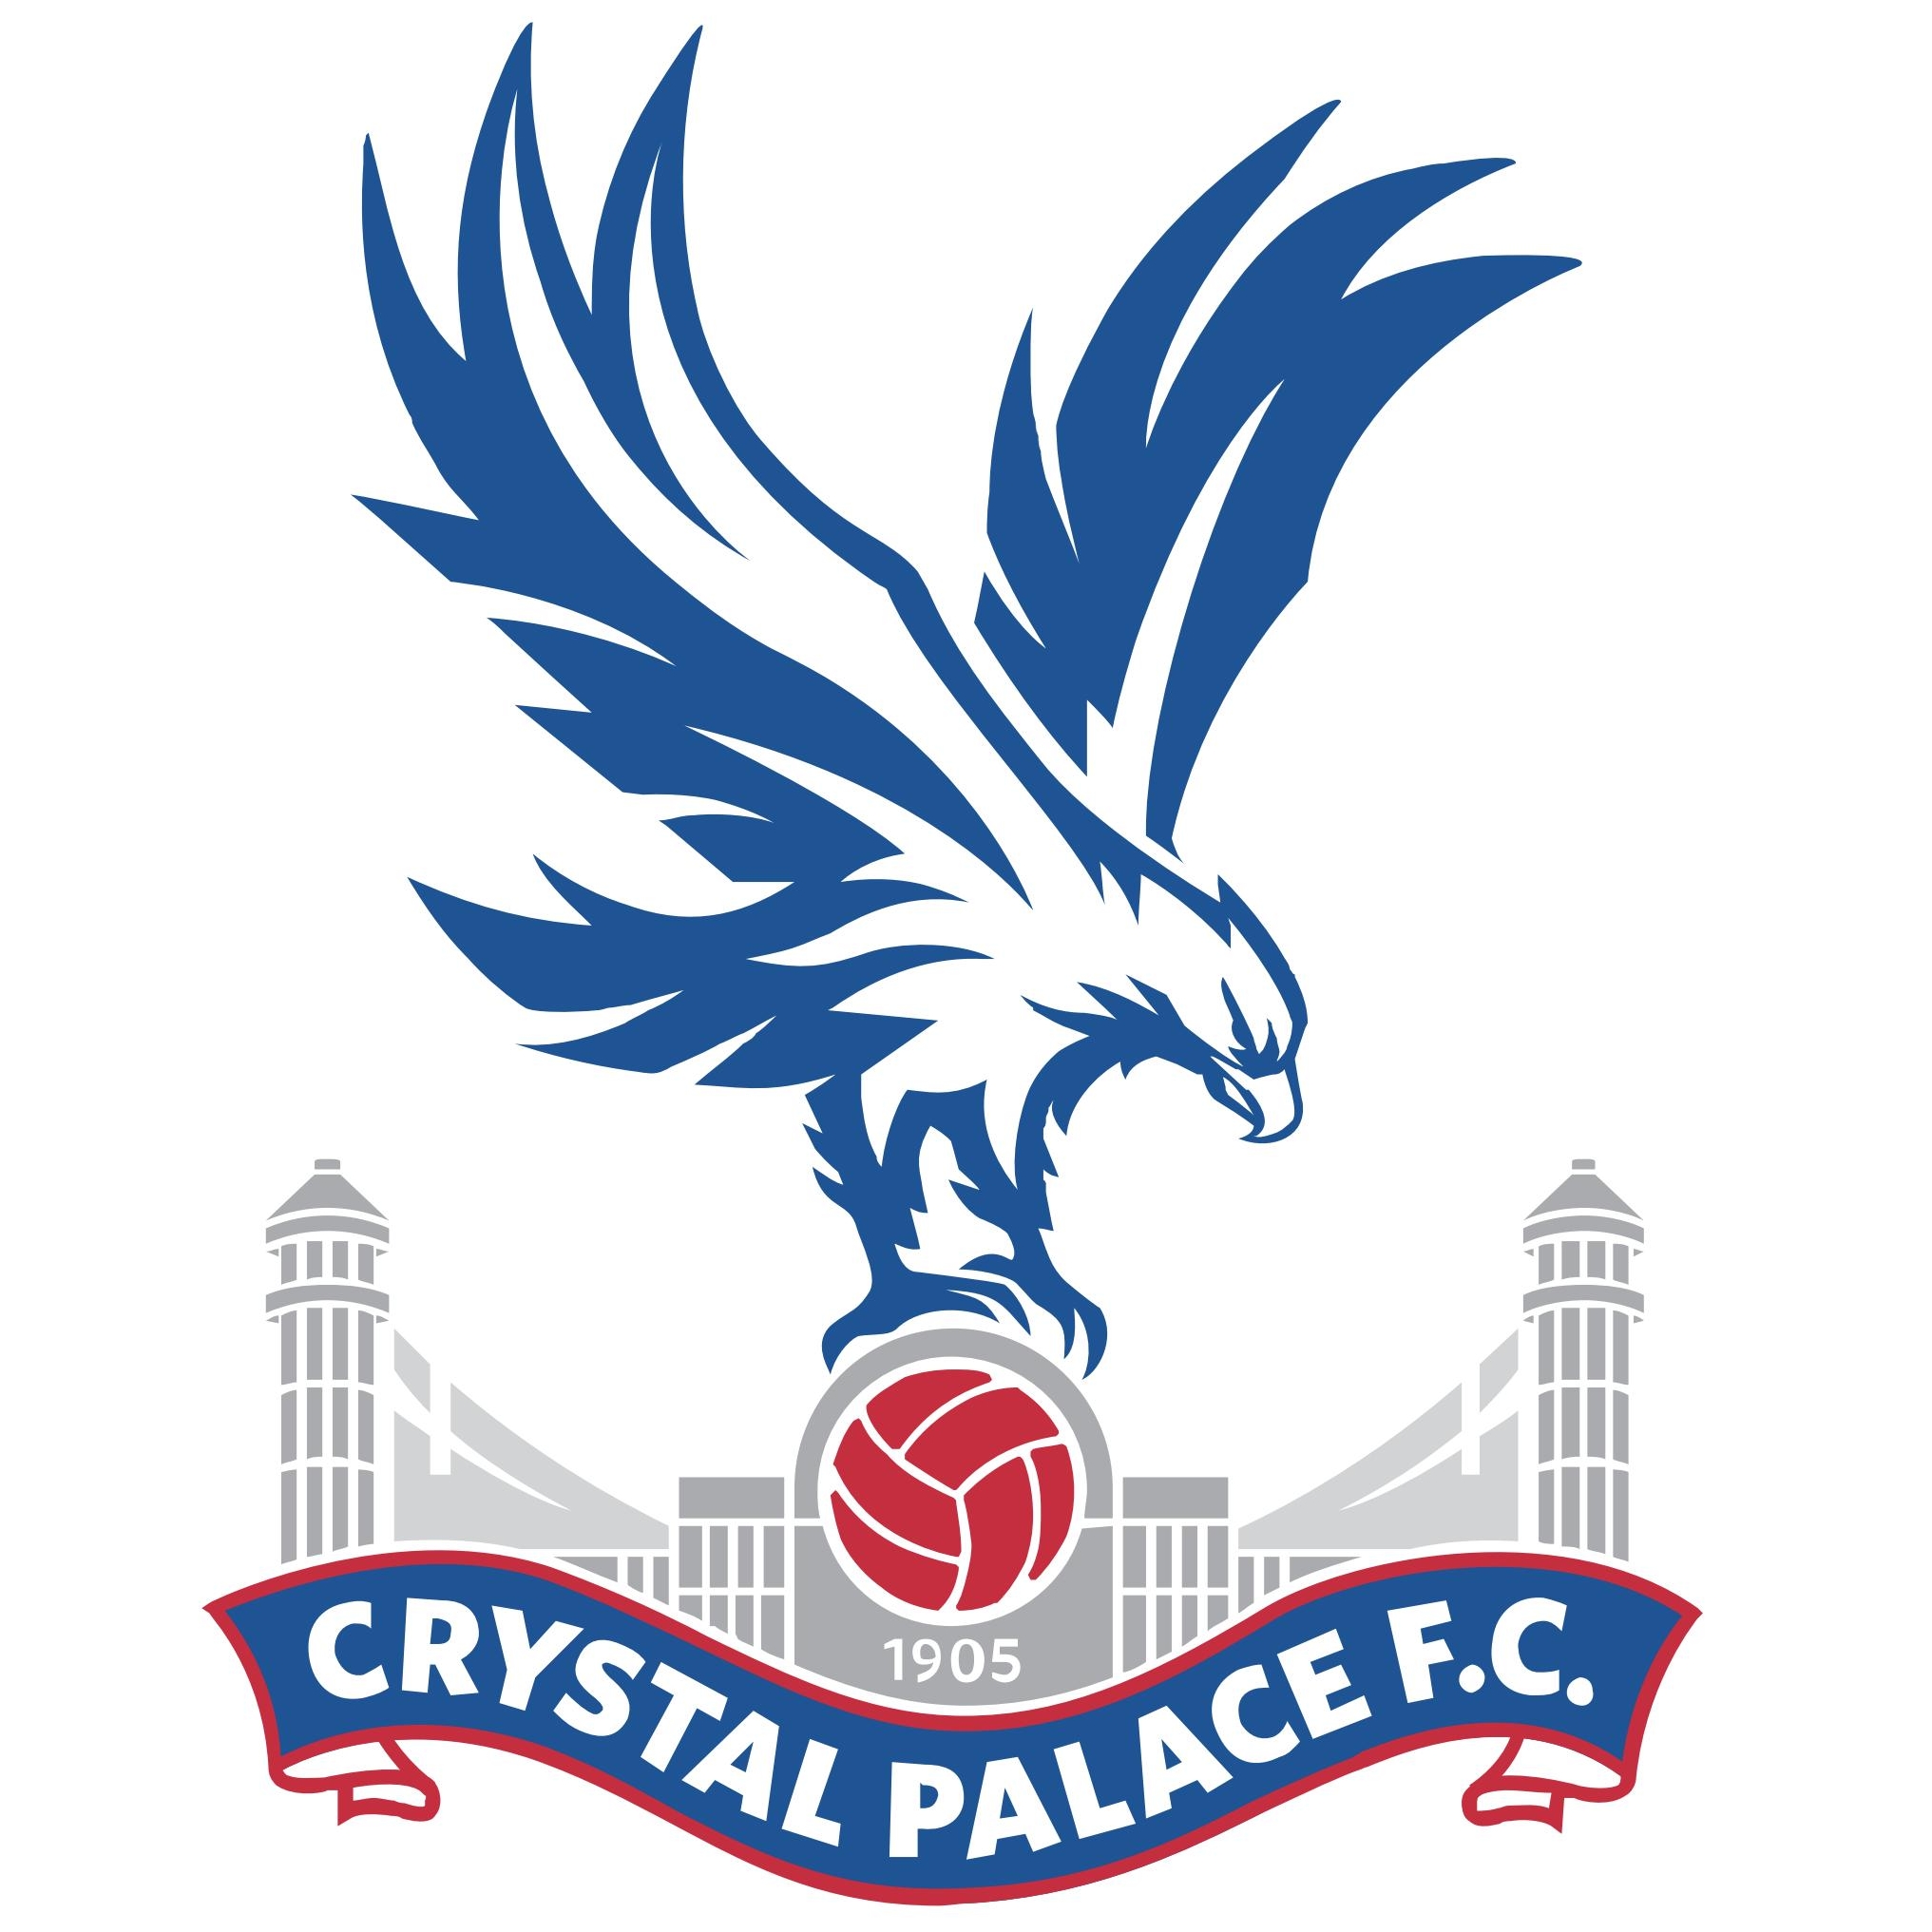 Crystal Palace Football Club Logo [Eps] - Crystal Palace Fc Vector, Transparent background PNG HD thumbnail